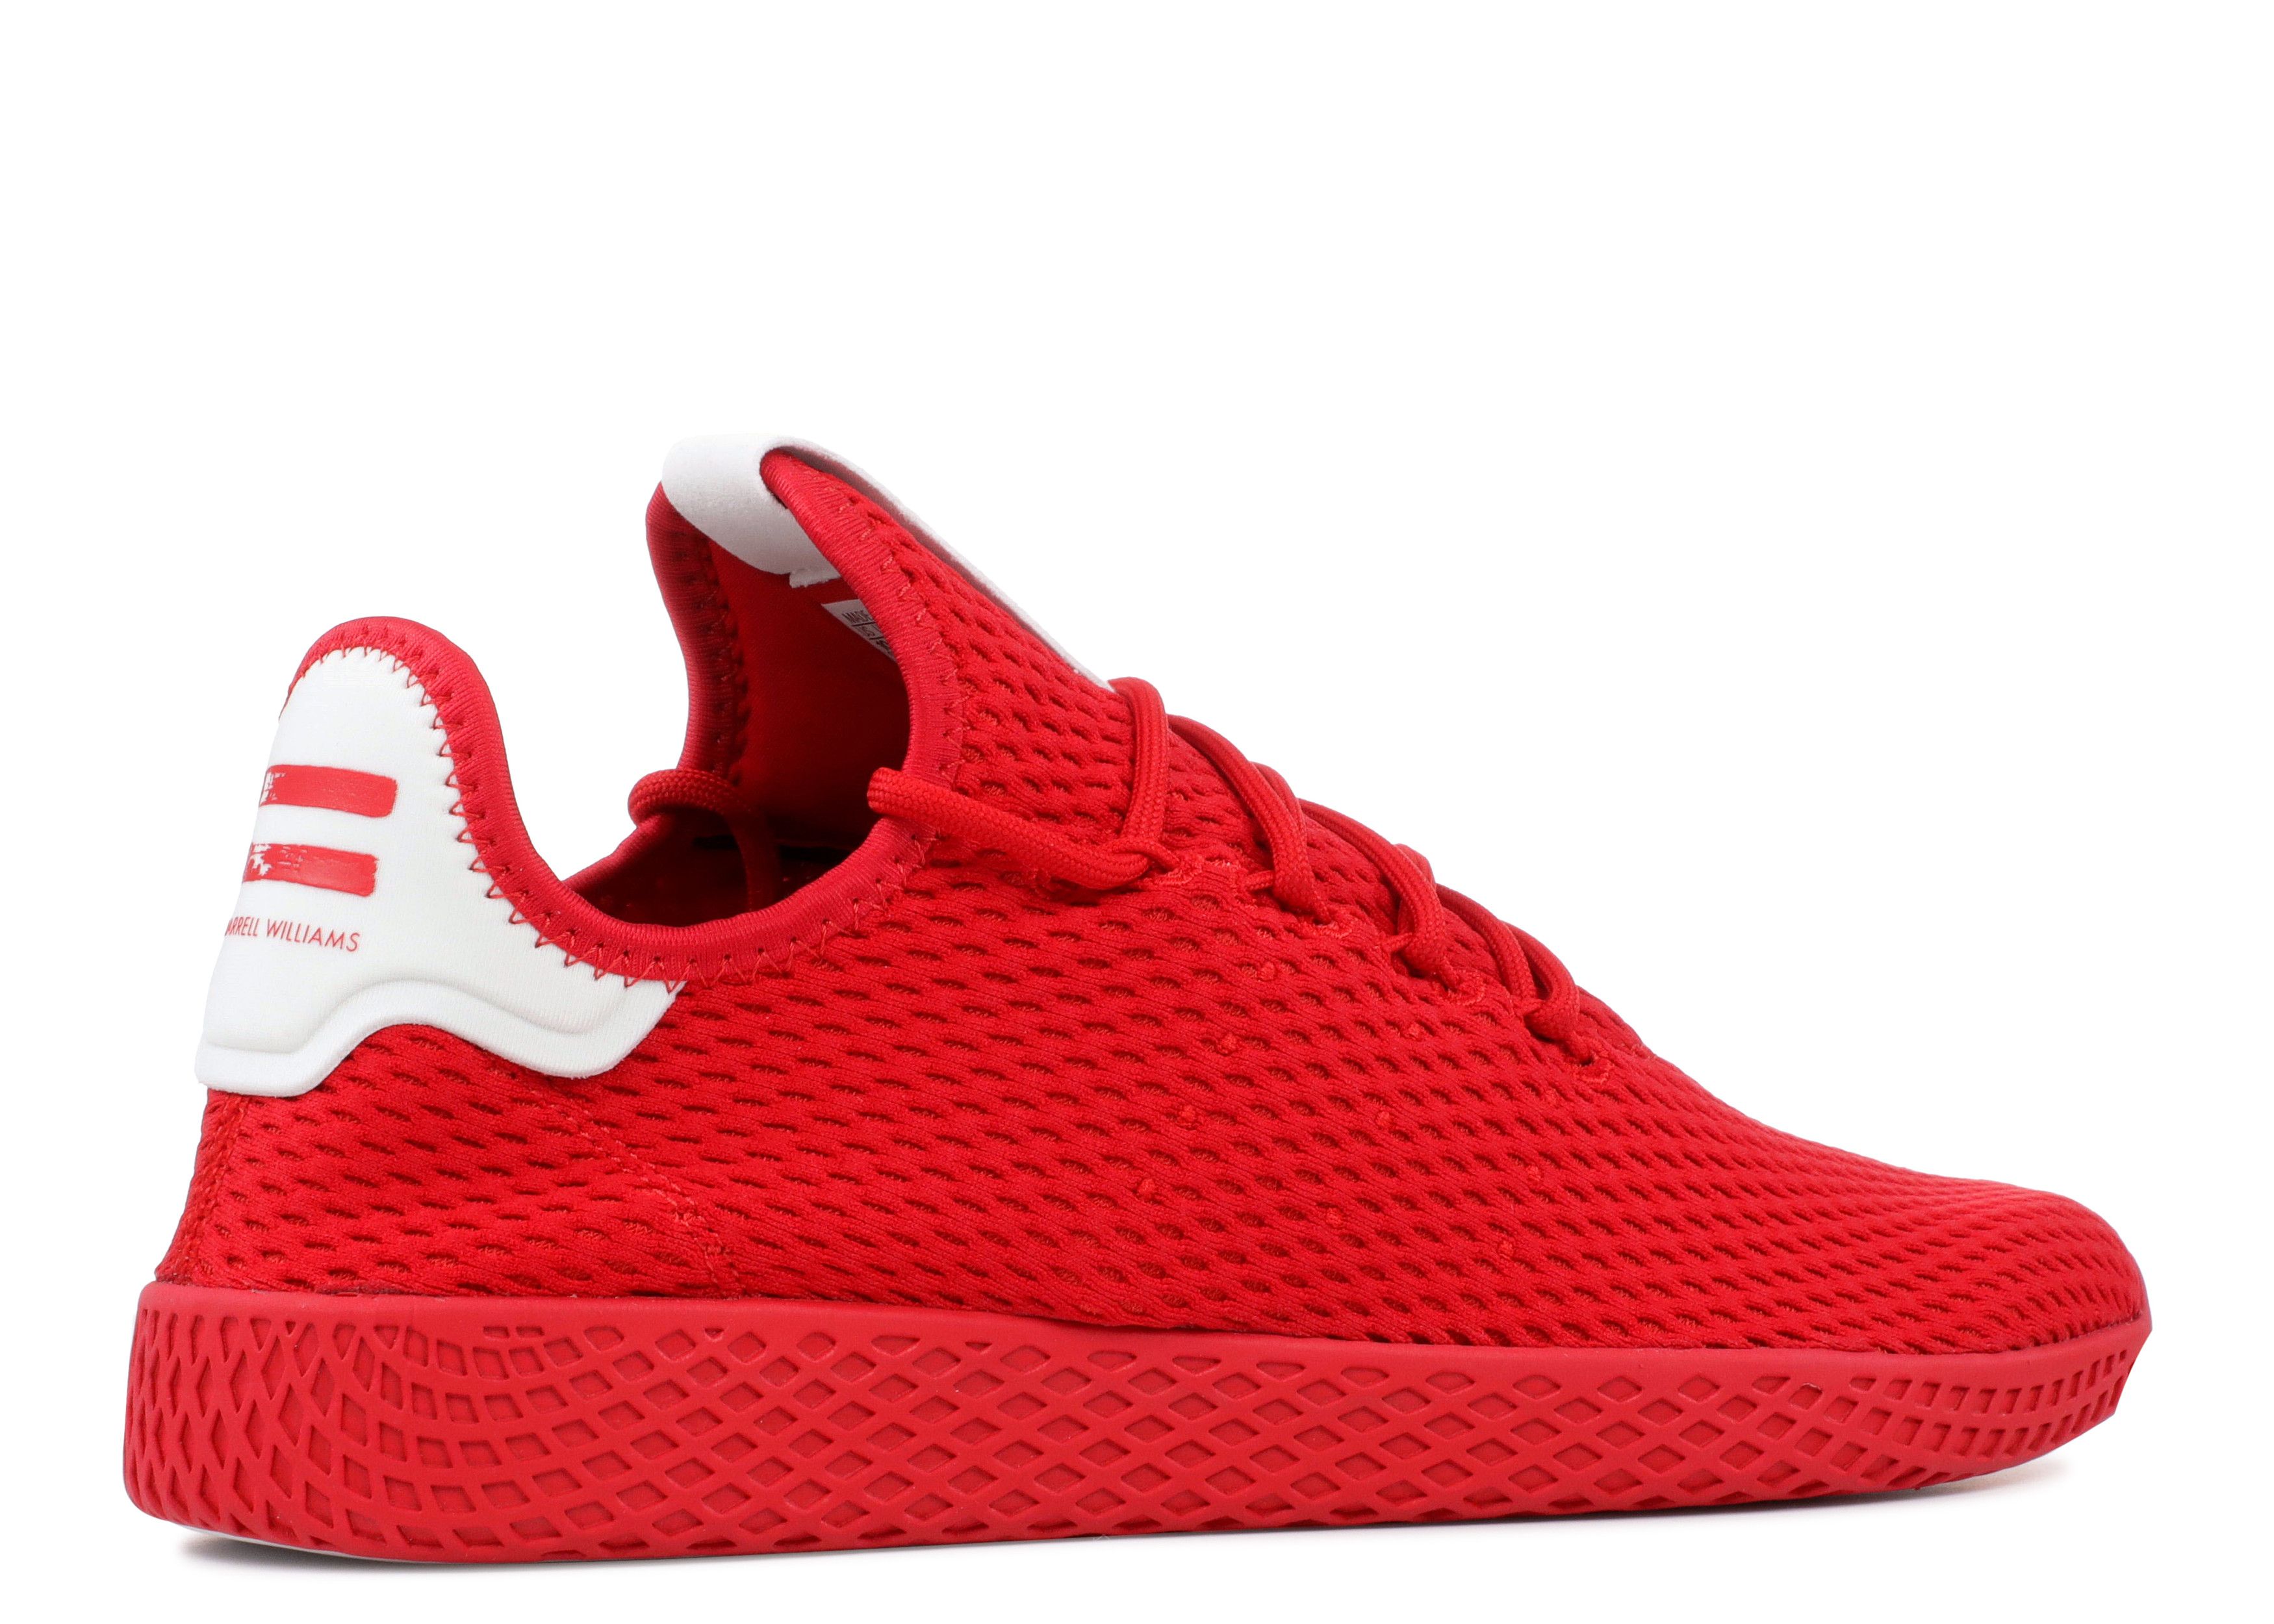 adidas hu shoes red